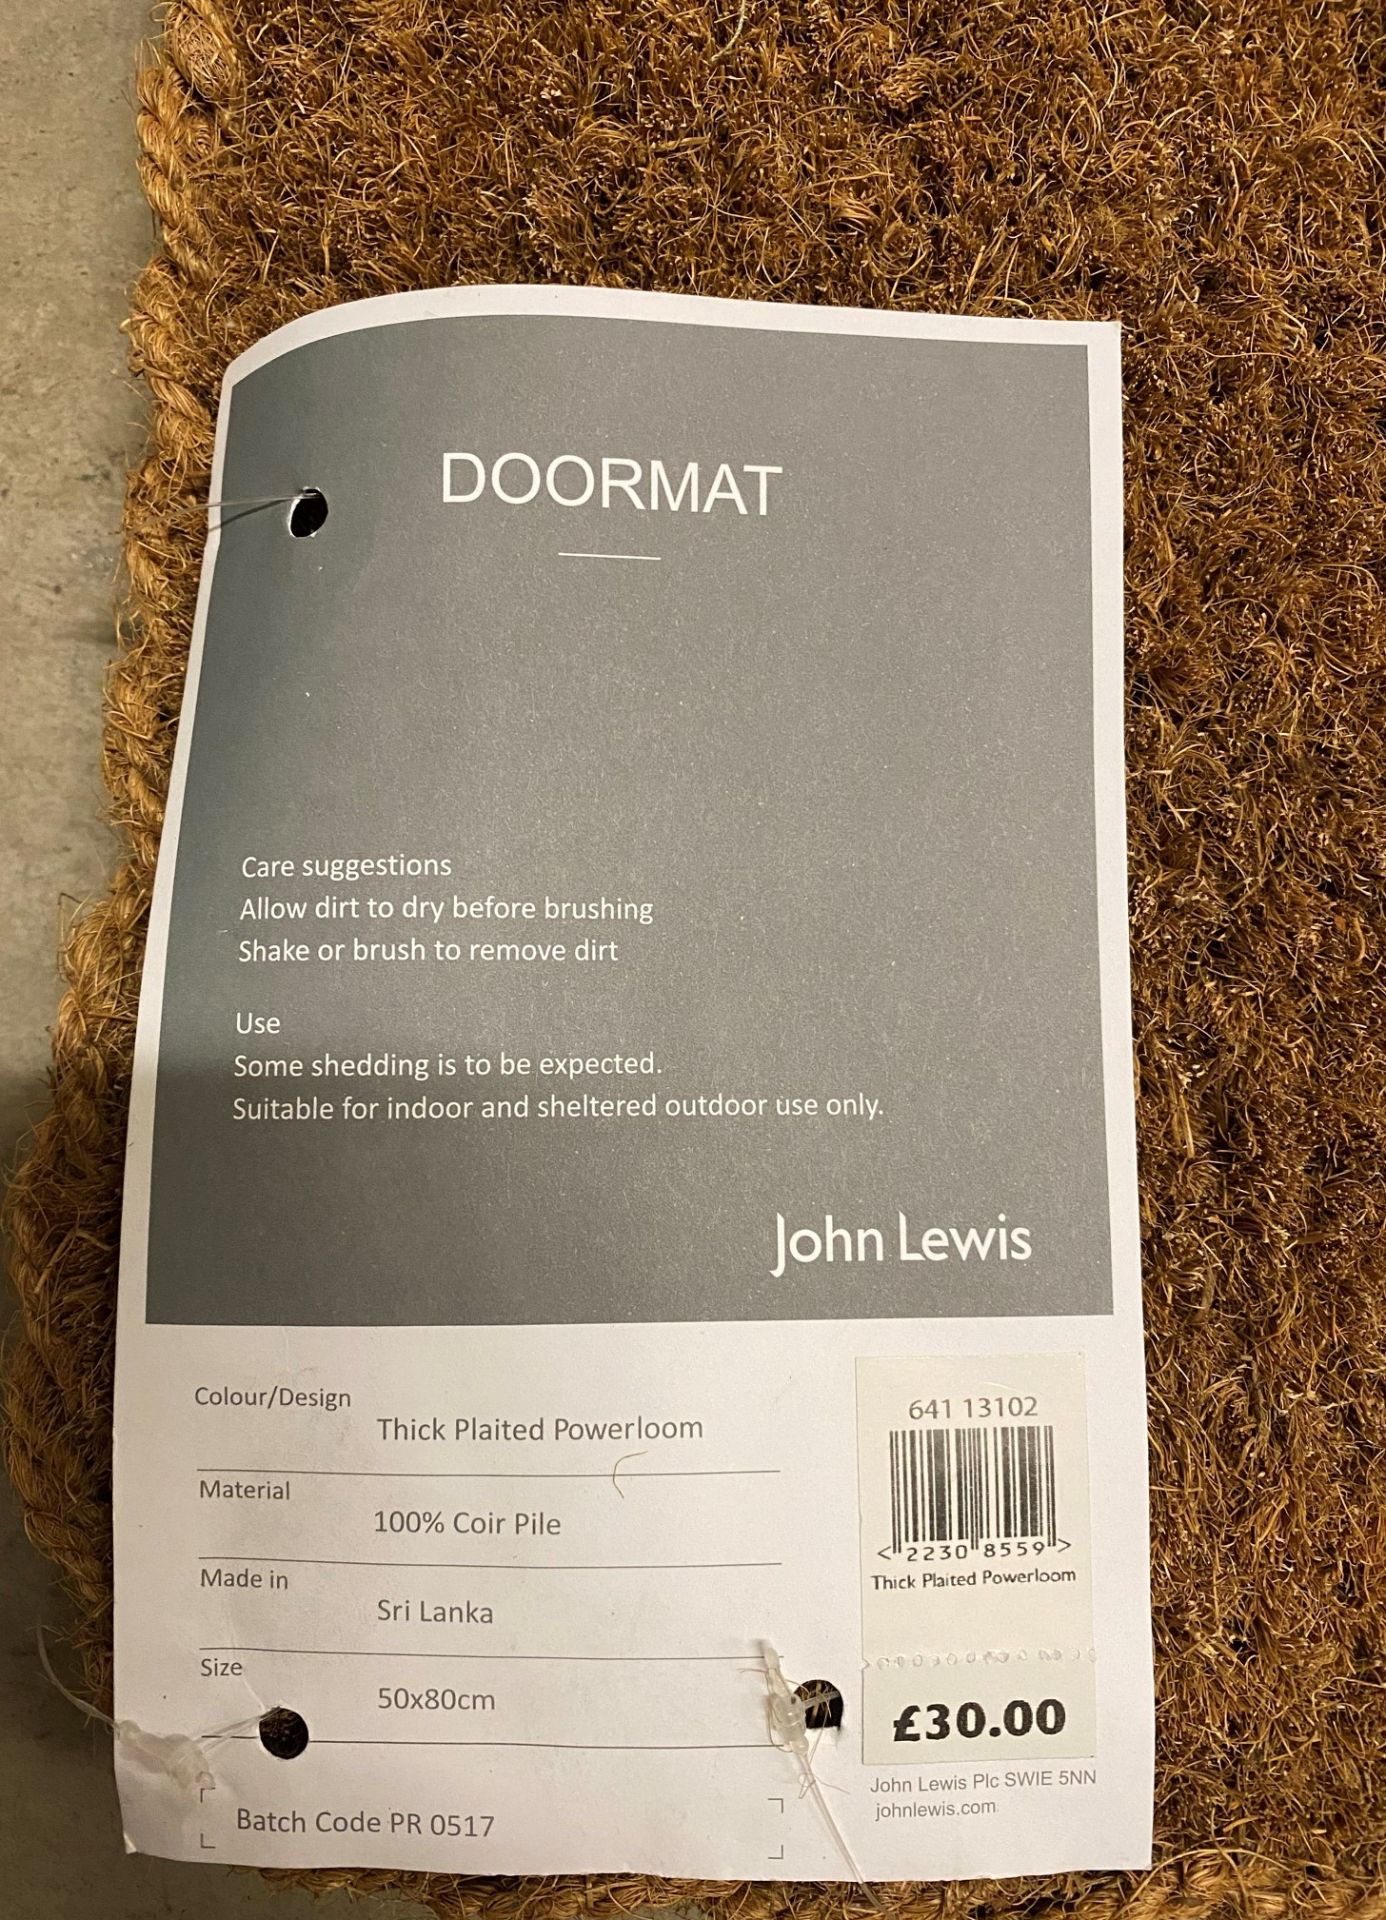 5 x John Lewis Thick Plaited Powerloom 100% Coir Pile door mats (50cm x 80cm) RRP £30 each - Image 3 of 6